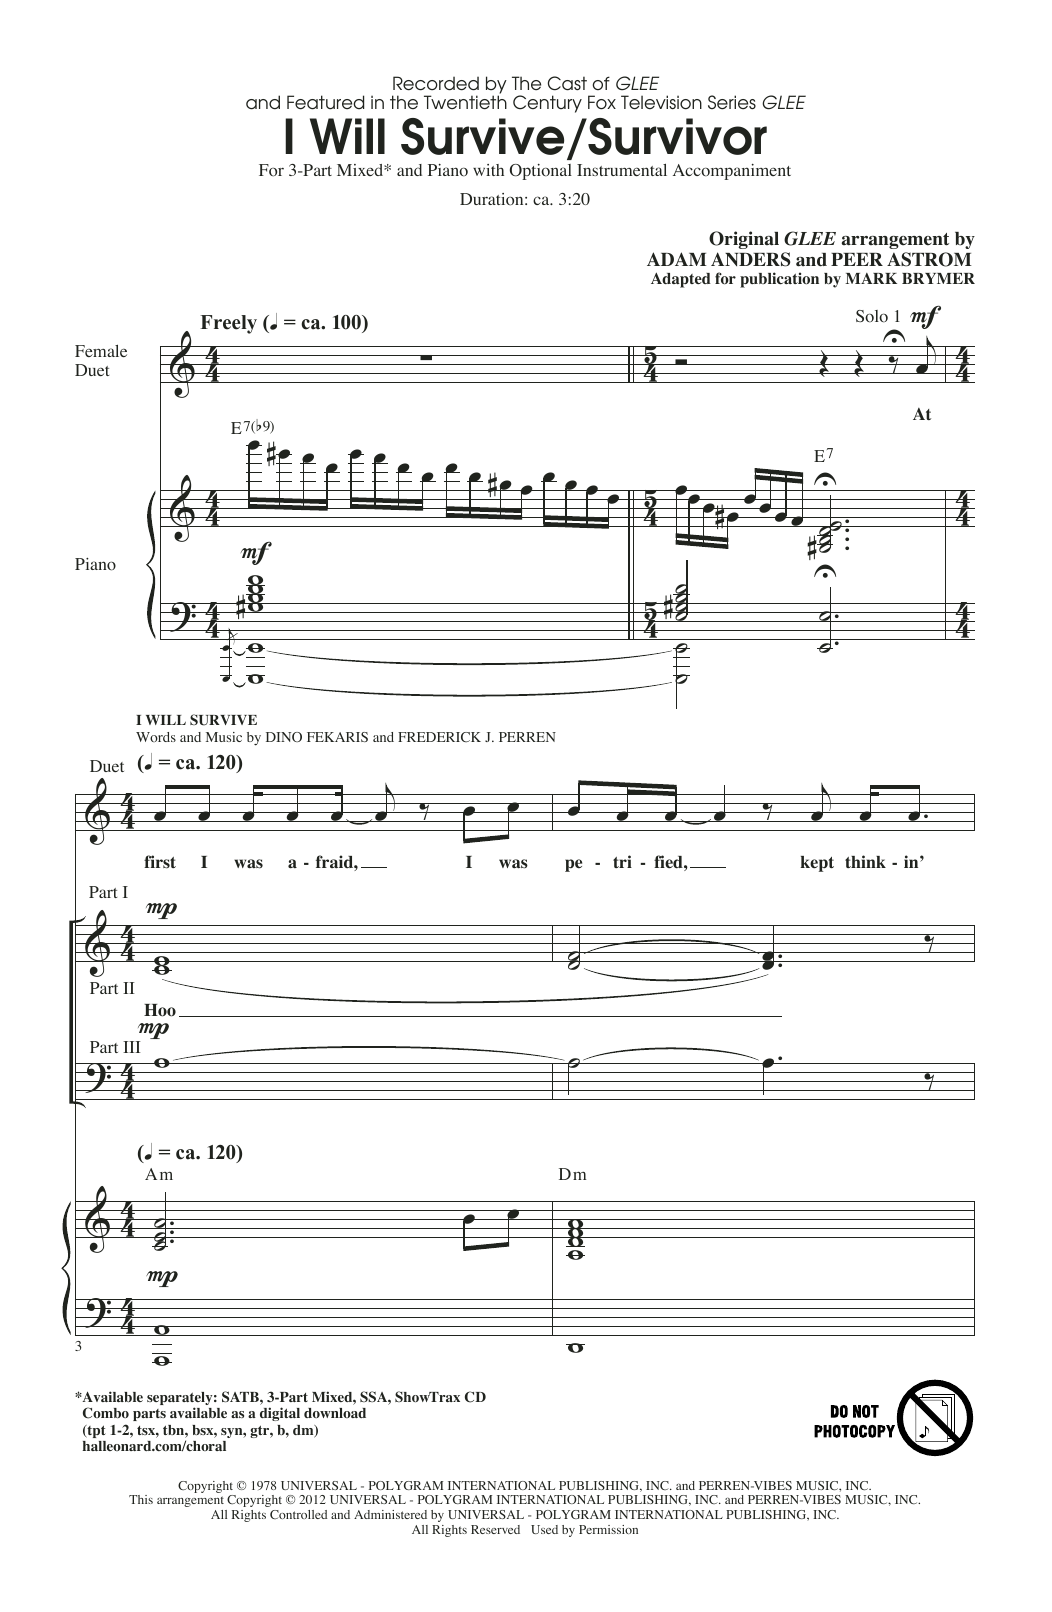 Glee Cast I Will Survive/Survivor (arr. Mark Brymer) Sheet Music Notes & Chords for SSA Choir - Download or Print PDF